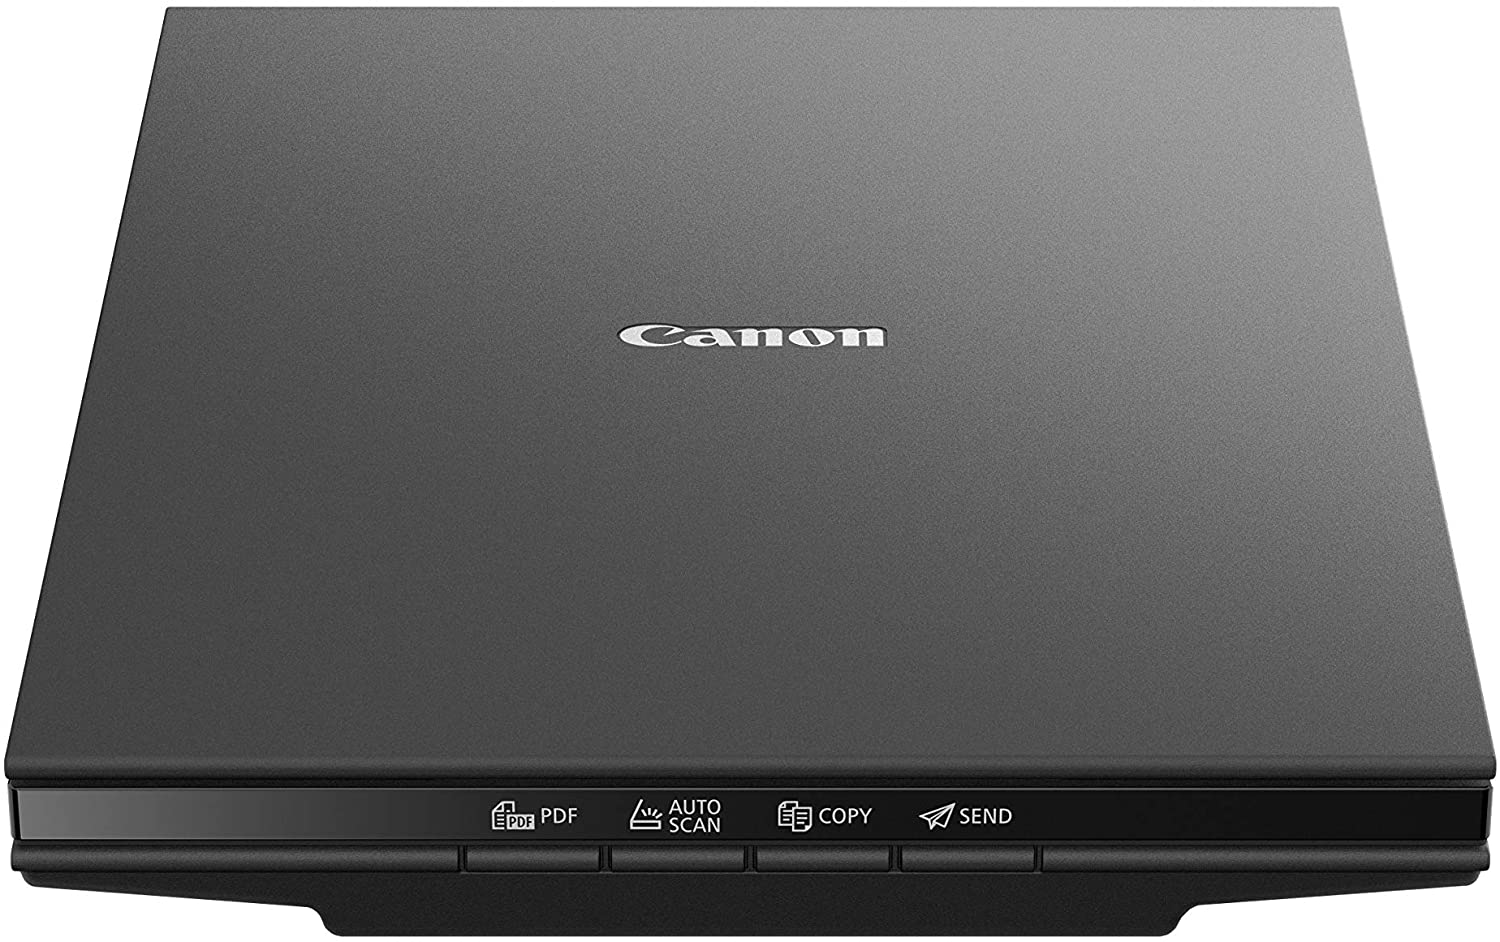 Canon LiDE 300 Colour Flatbed Scanner - Black, 2400x2400 dpi uk reviews